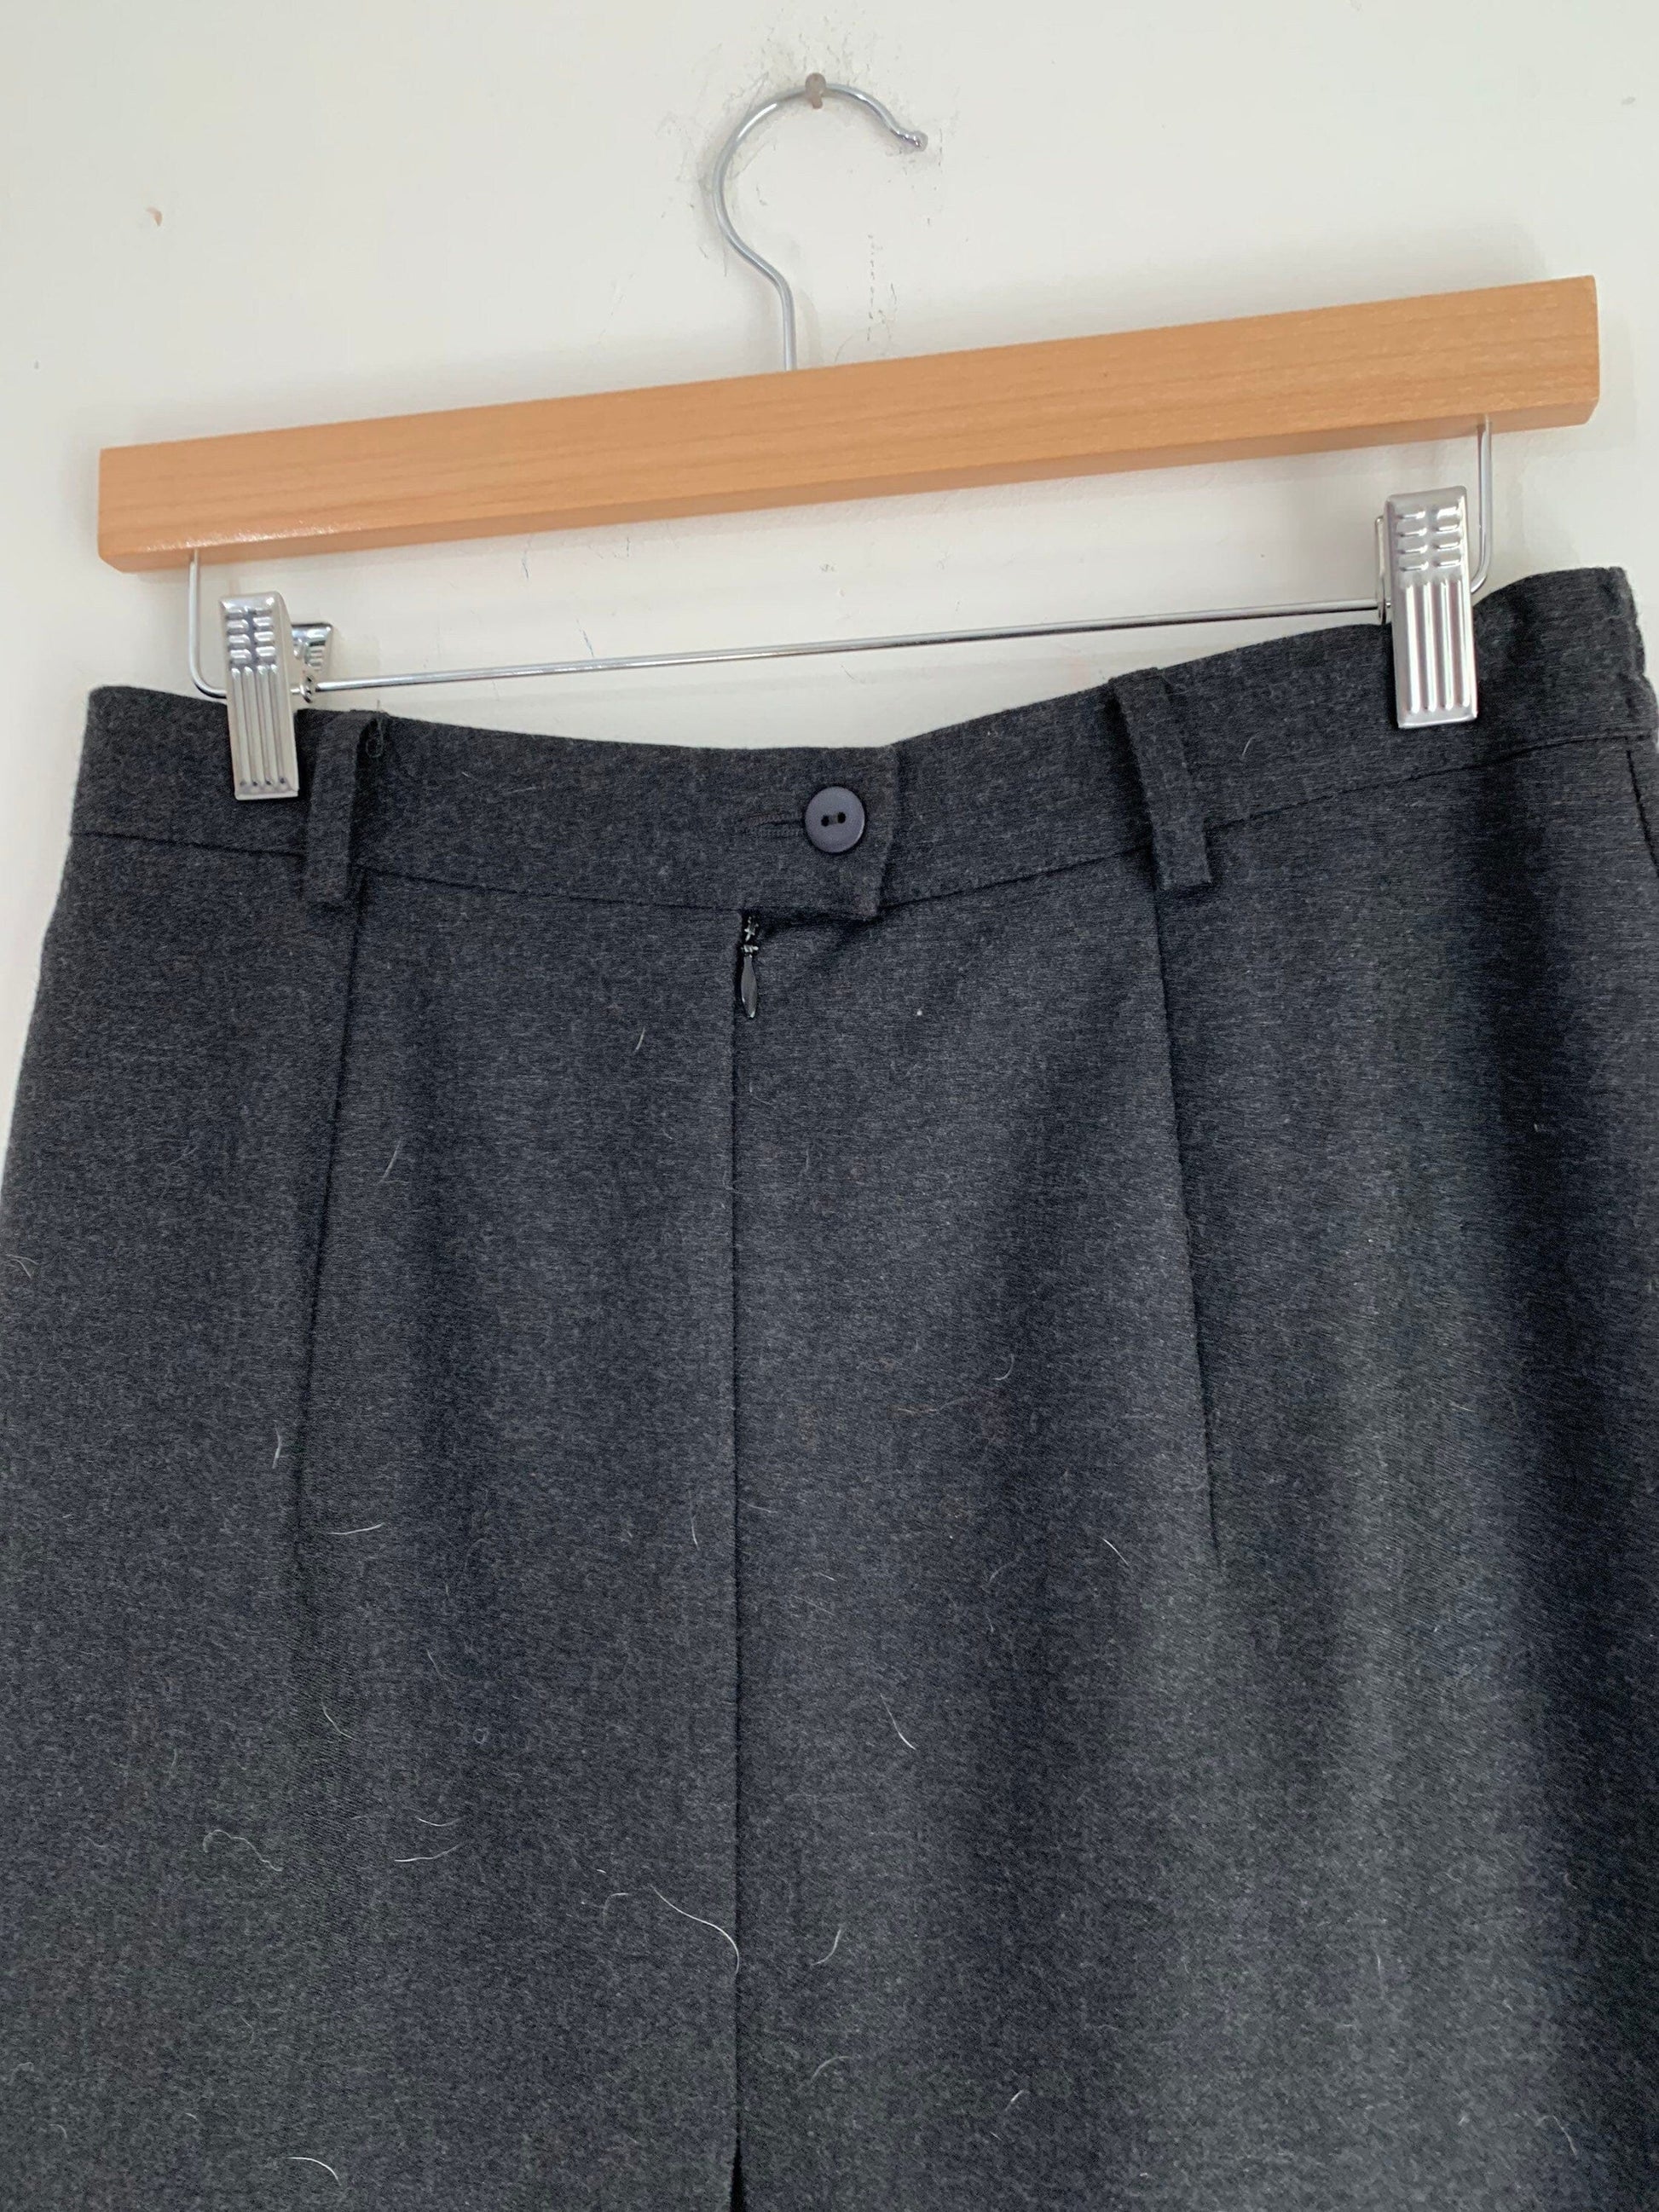 Vintage Skirt Midi Grey Pleat Fink Below the Knee Length UK 12-14 - WITH POCKETS - Vintage Skirt